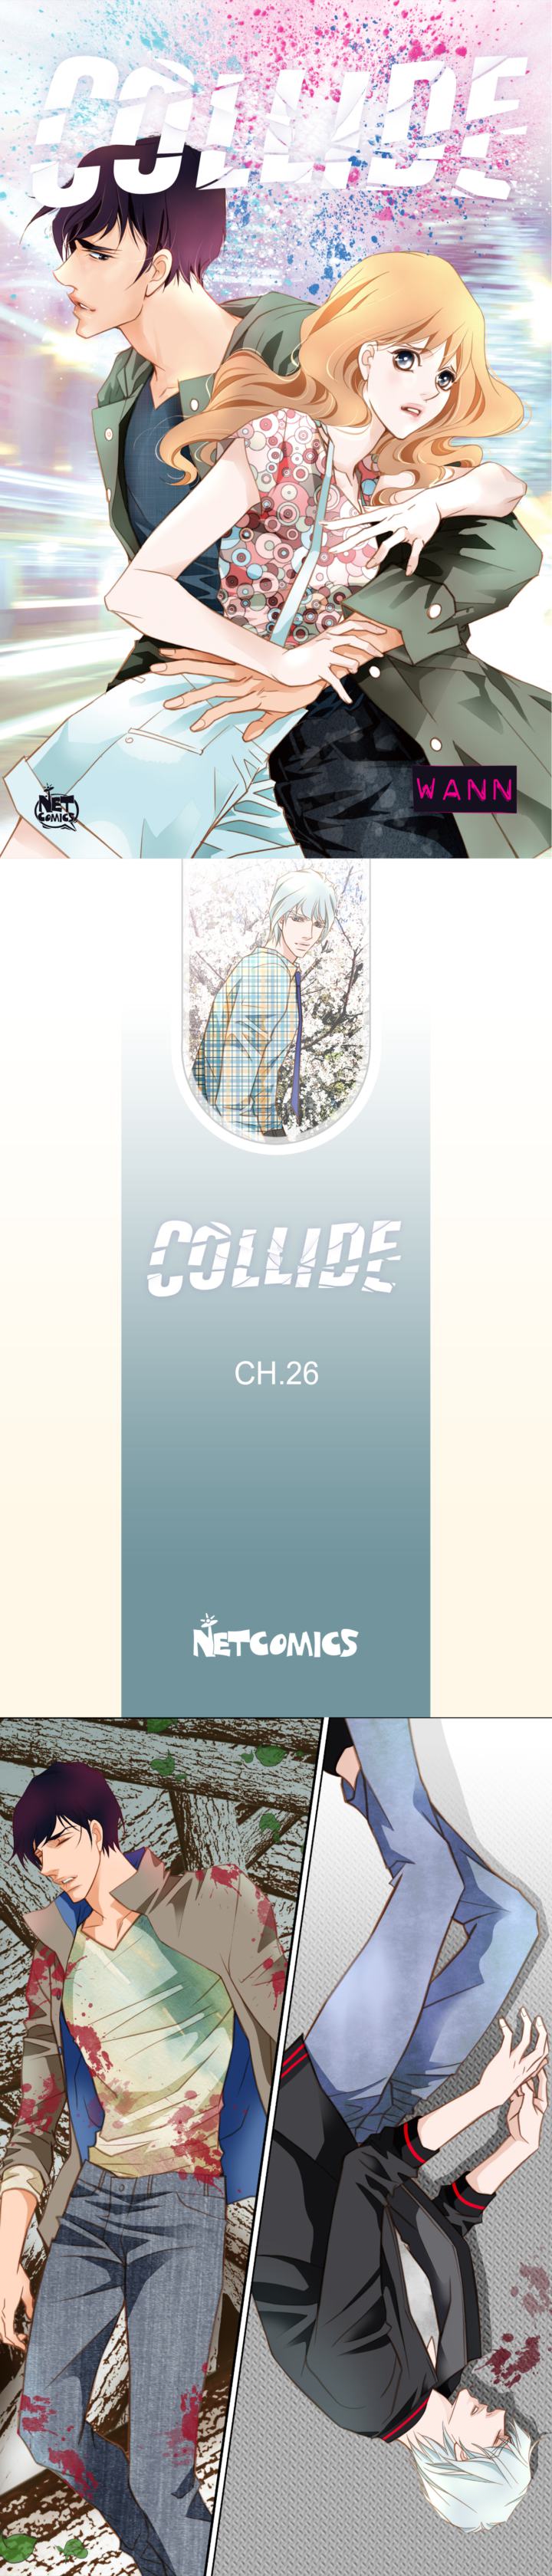 Collide Ch.26